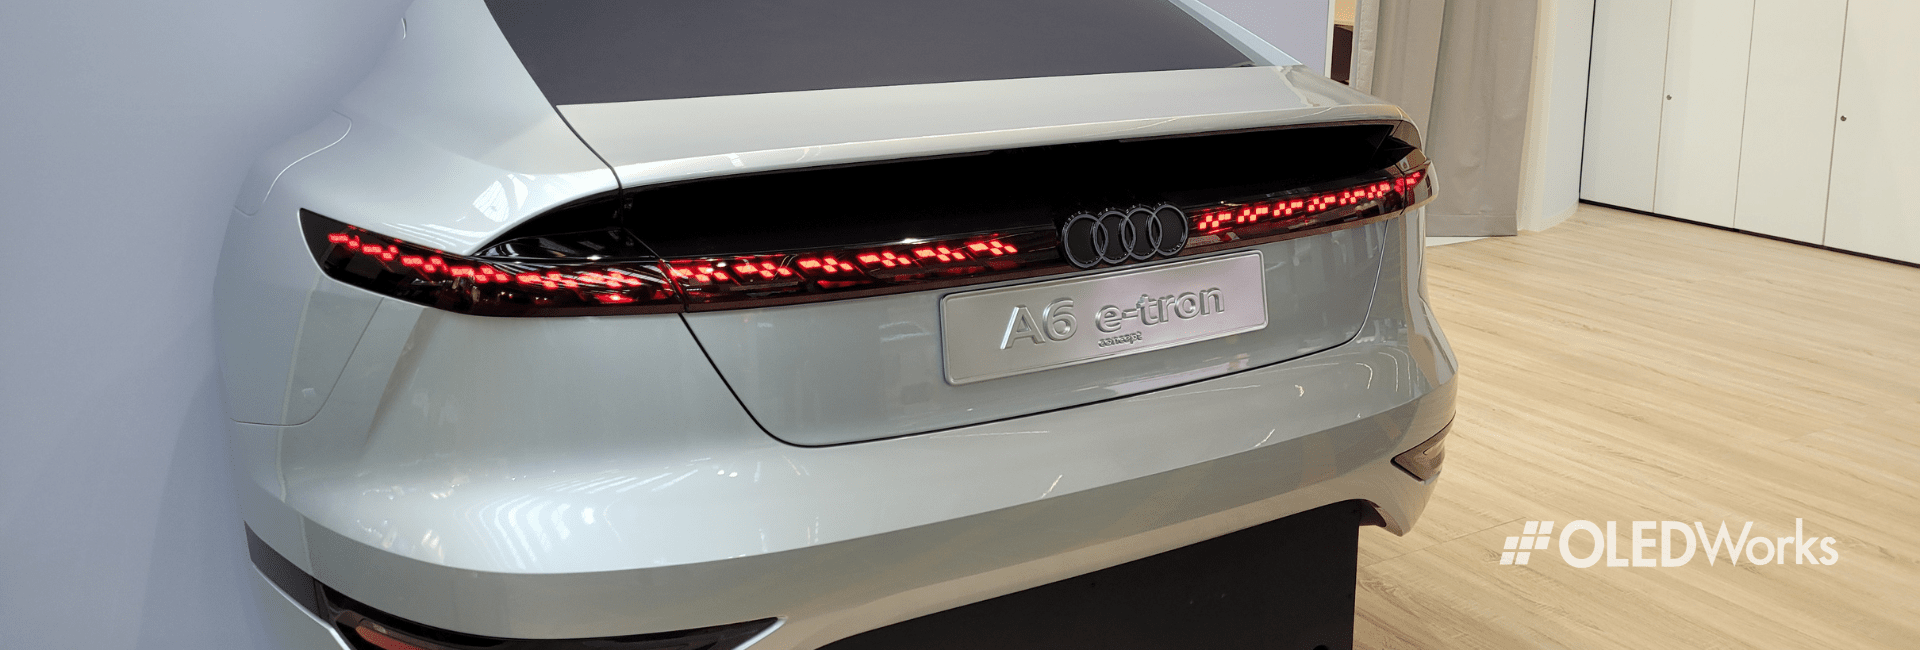 Audi A6 e-tron Rear Demonstrator | OLEDWorks